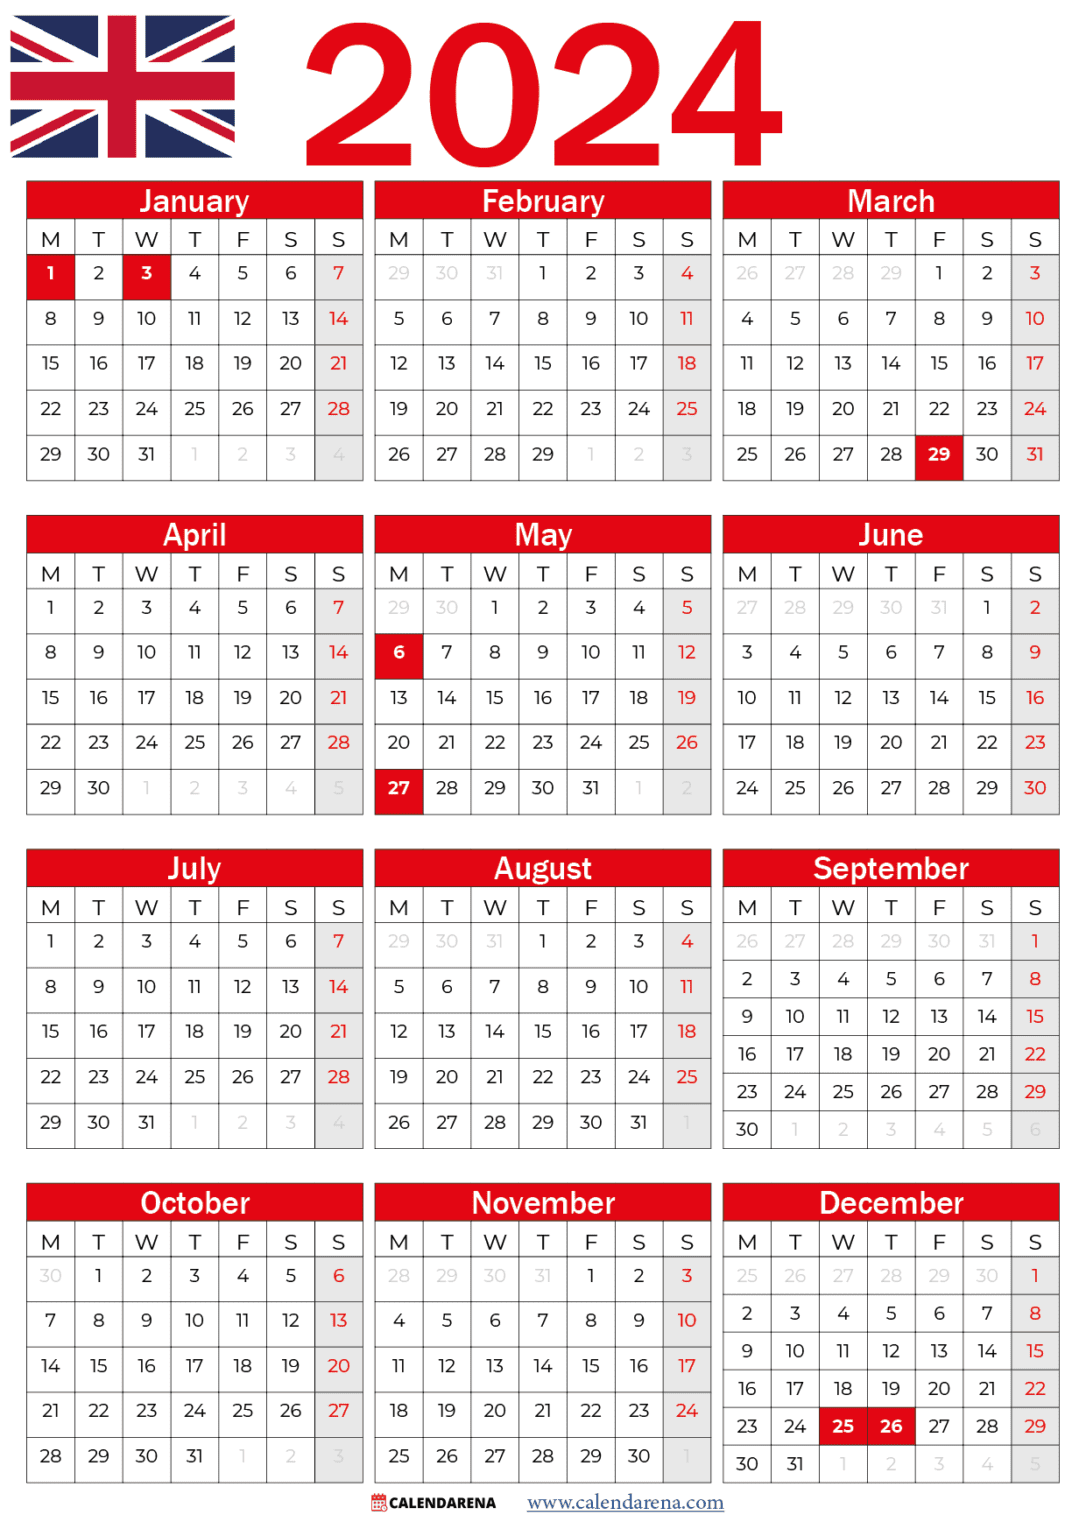 2024 Calendar Uk With Bank Holidays Printable Jan 2024 Calendar - Free Printable 2024 Calendar With UK Bank Holidays